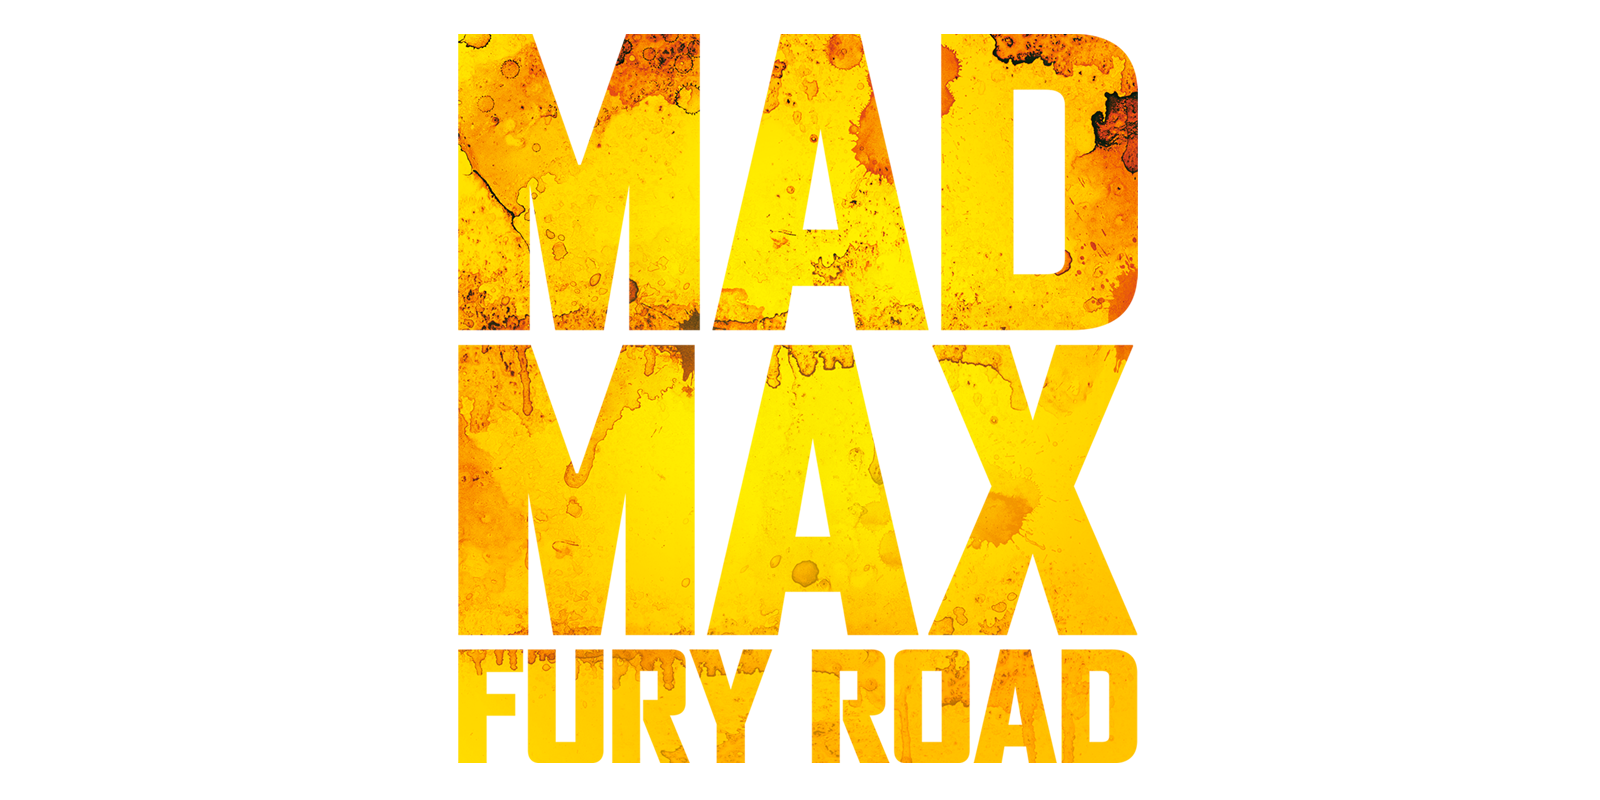 mad max fury road free full movie.